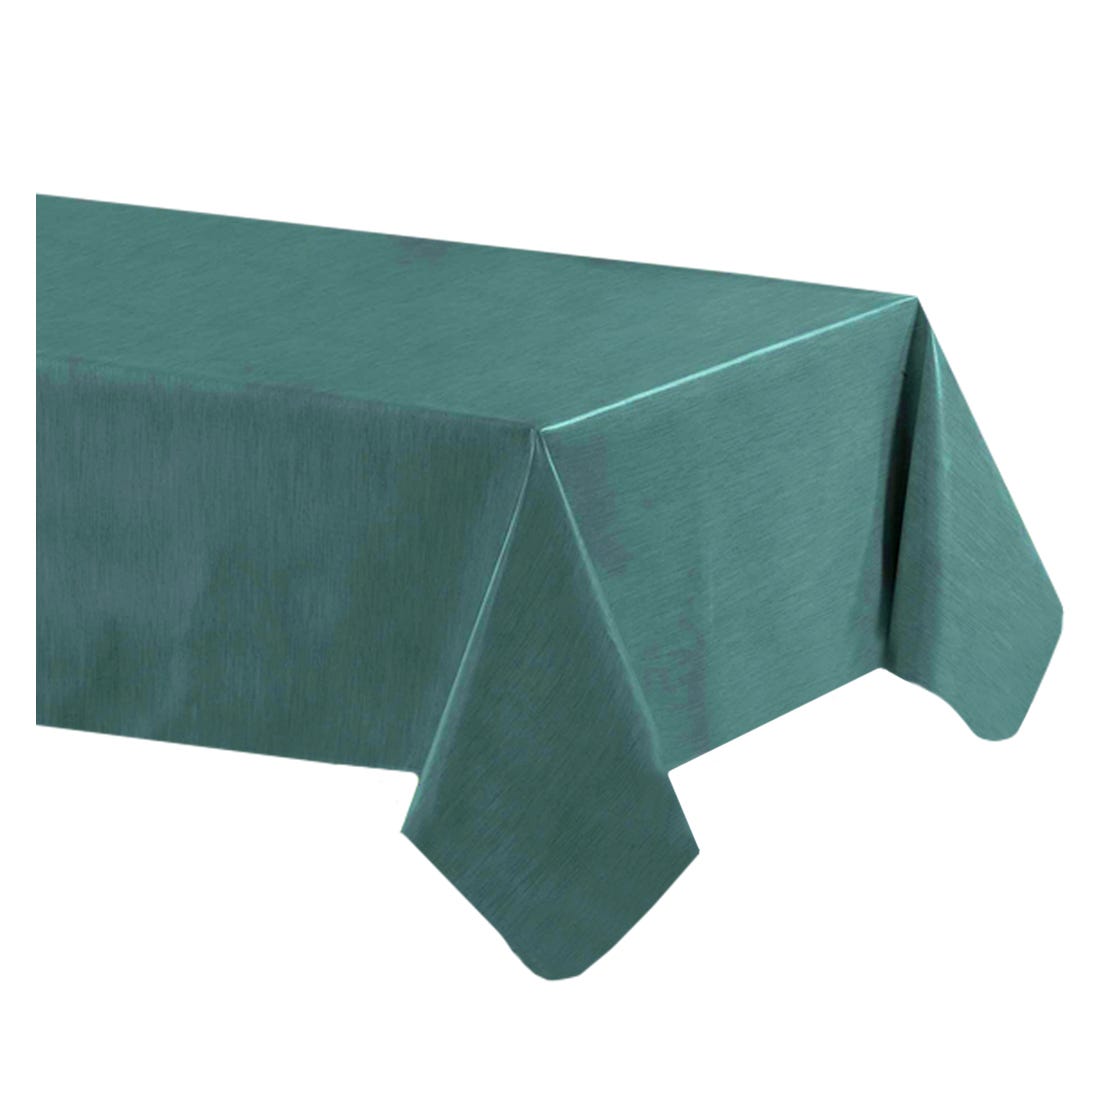 Acomoda Textil – Mantel Antimanchas Rectangular de Hule al Corte. Mantel  Liso Elegante, Impermeable, Resistente y Lavable. (Azul, 140x240 cm)